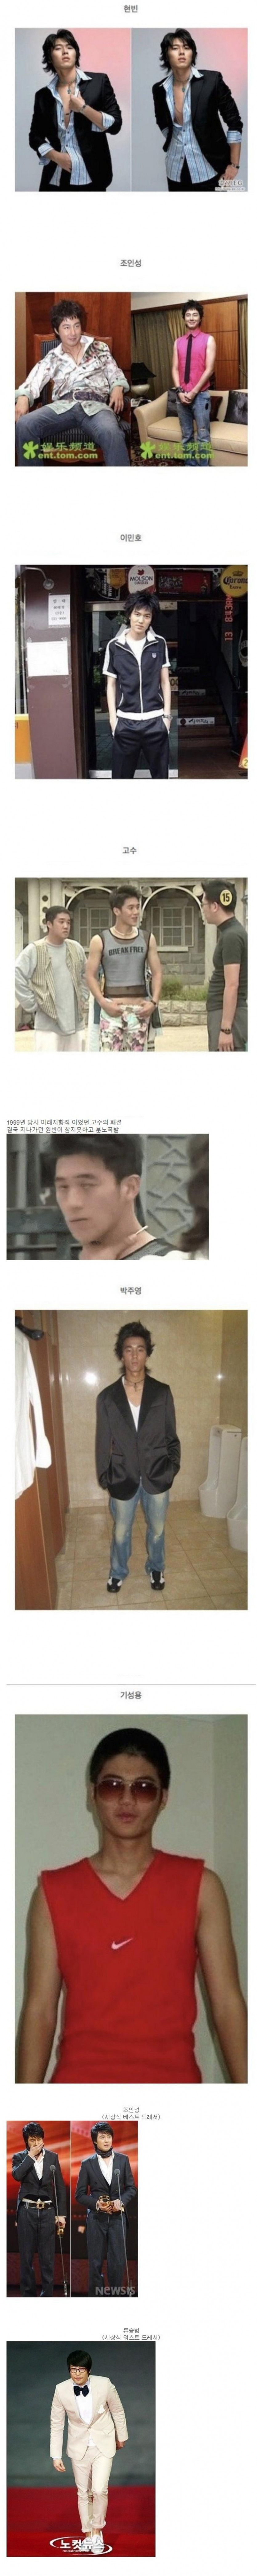 nokbeon.net-대한민국 패션 황금기-1번 이미지